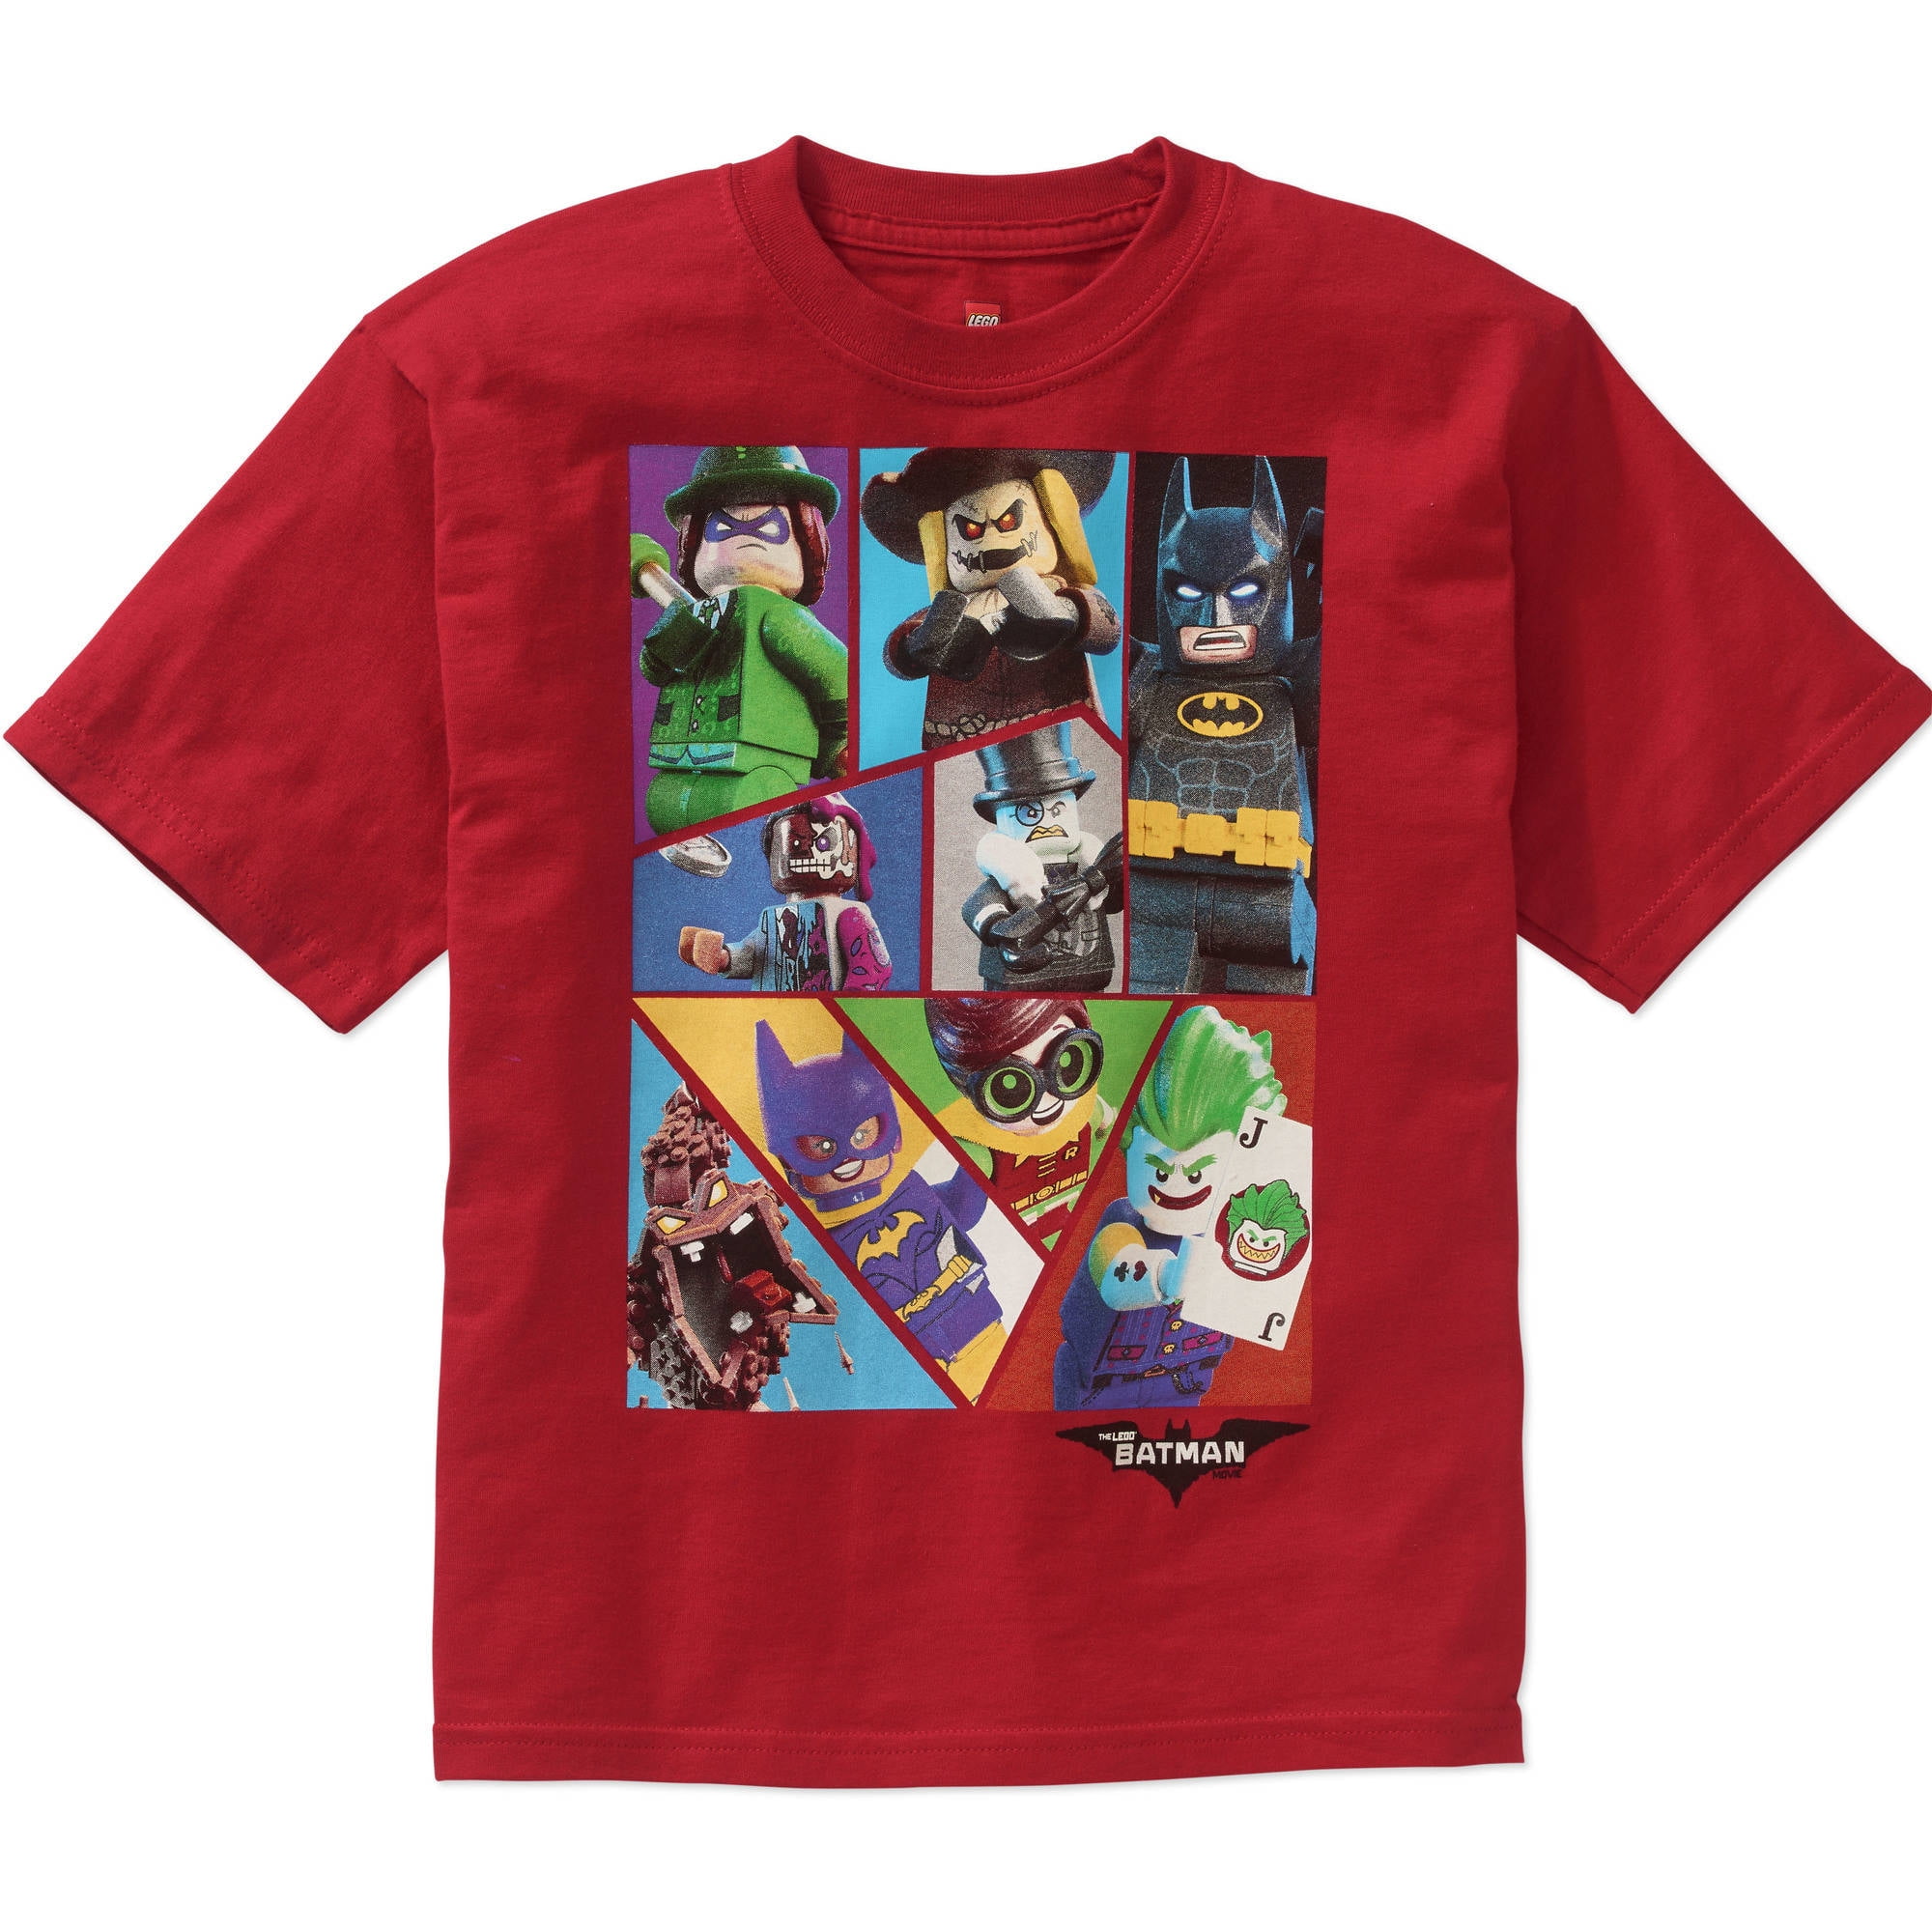 Sizes 1-15 Yrs Lego DC Comics Super Heroes 'Batman' Childs T-Shirt 